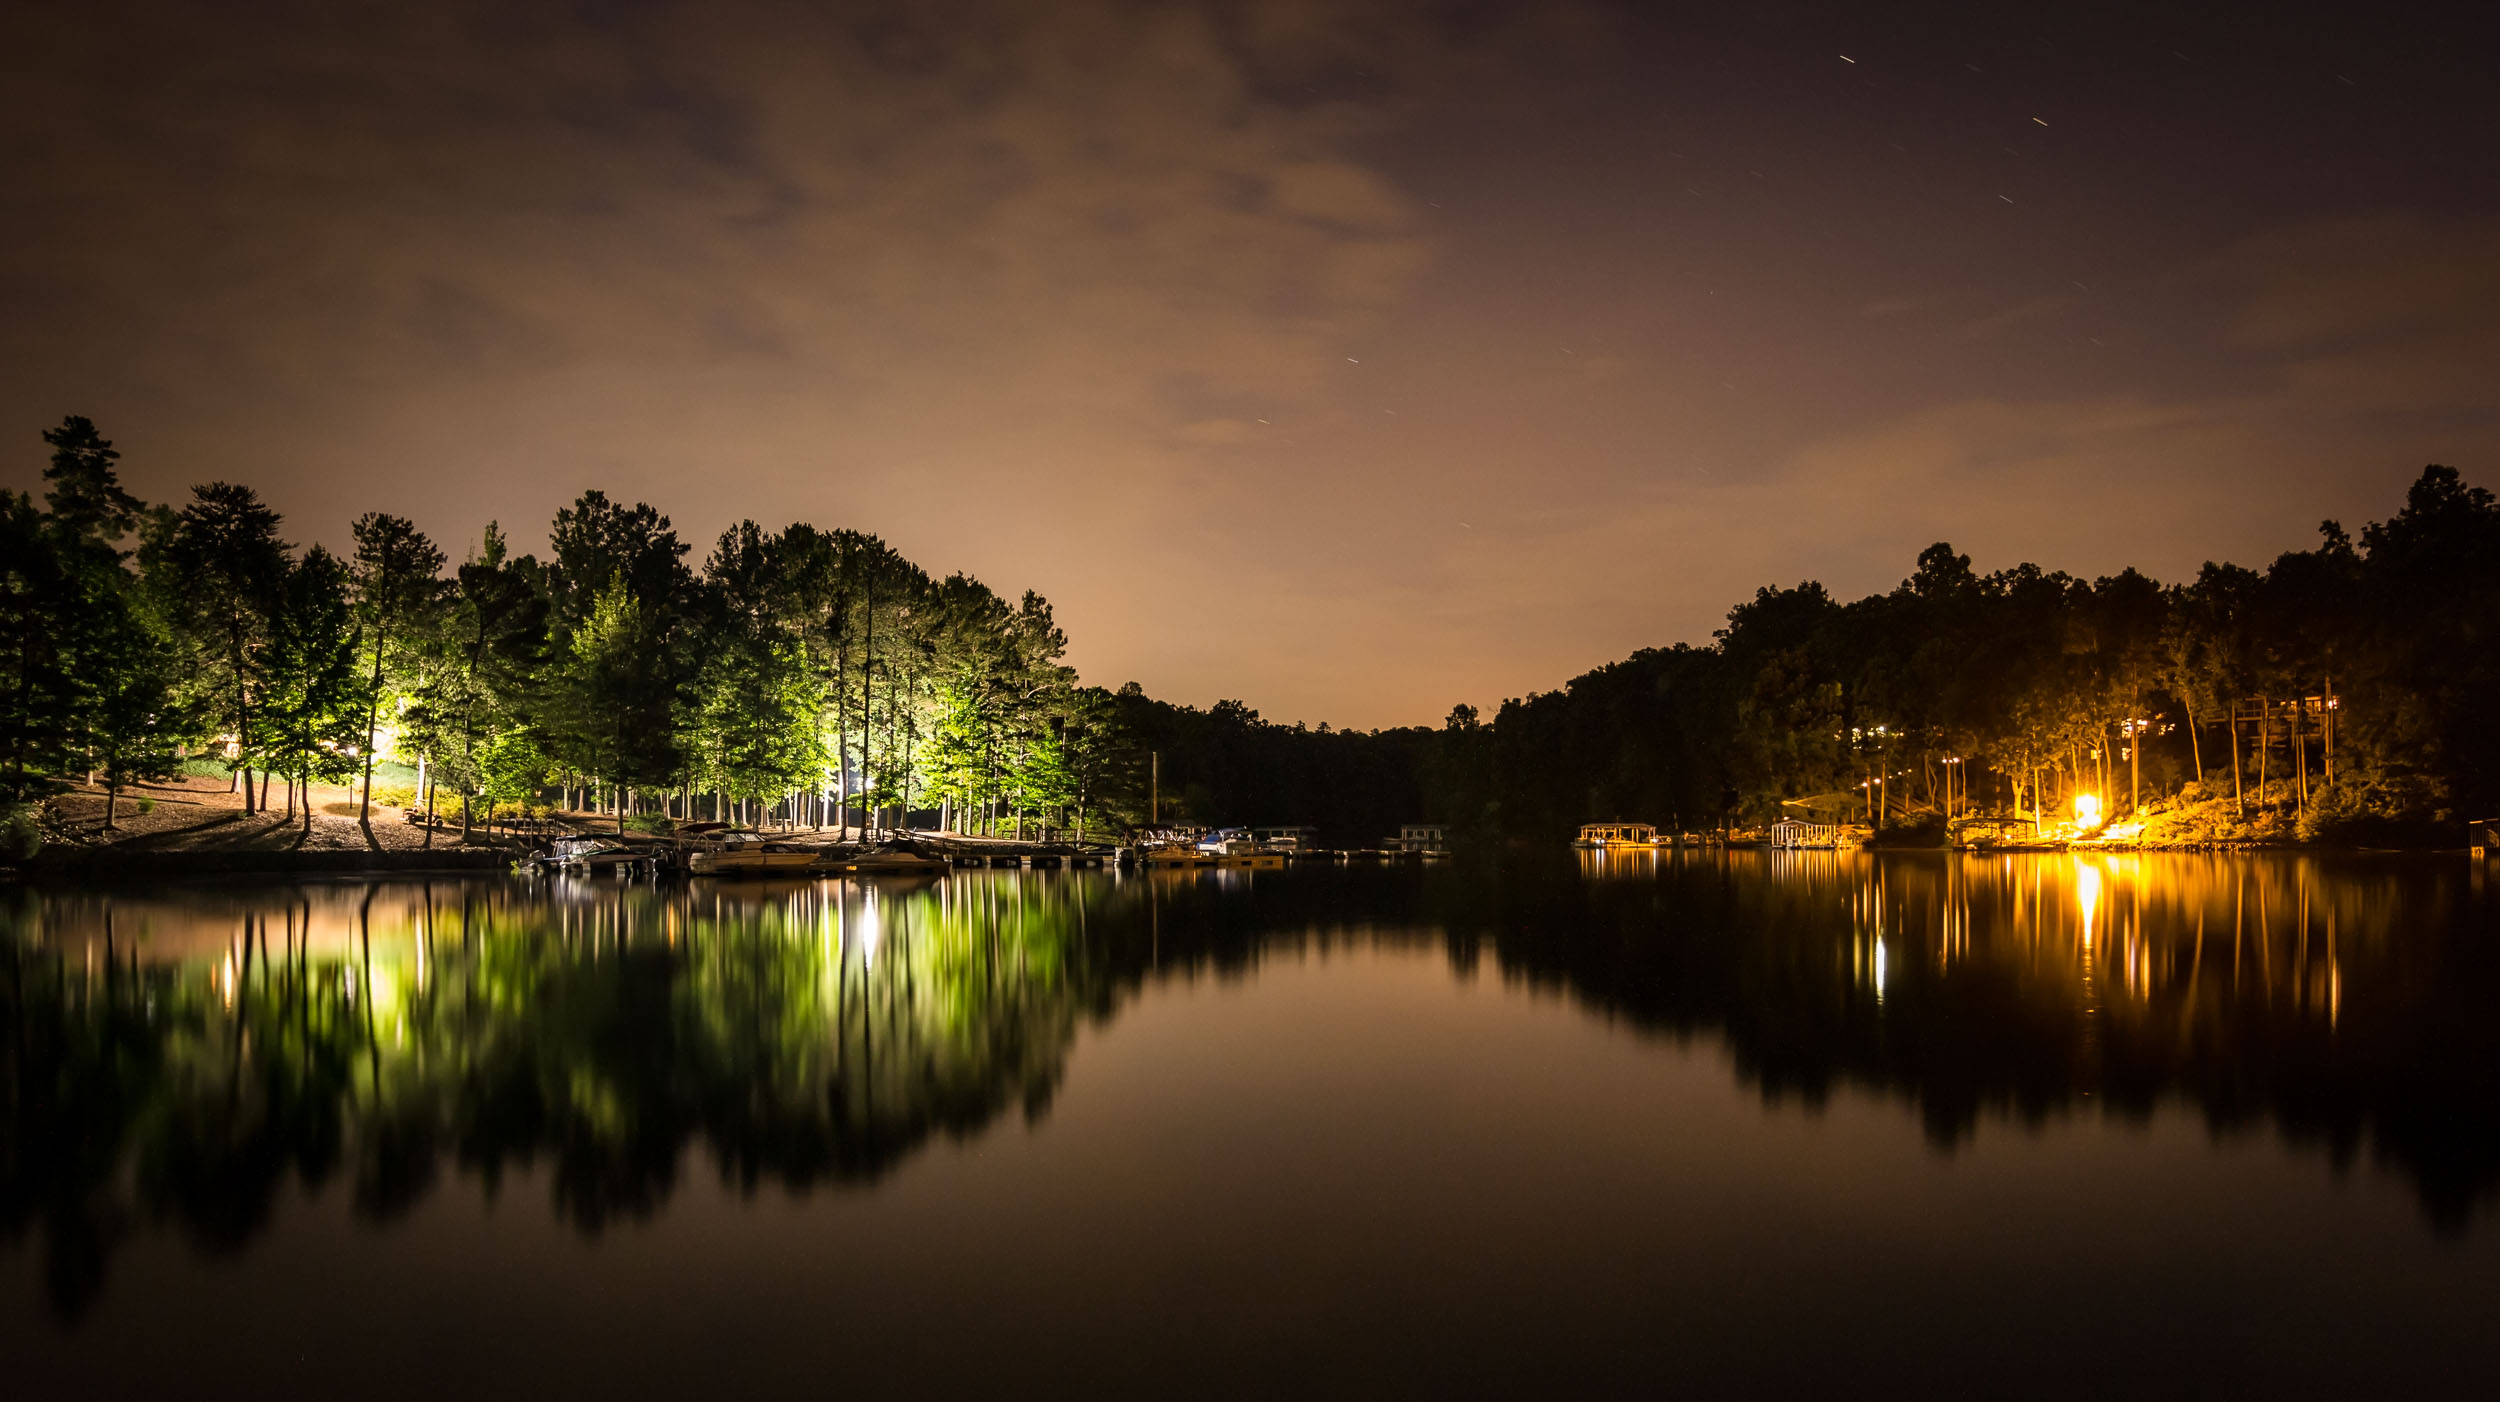 Lake Camp Reflections photo by Ron Hautau.jpg